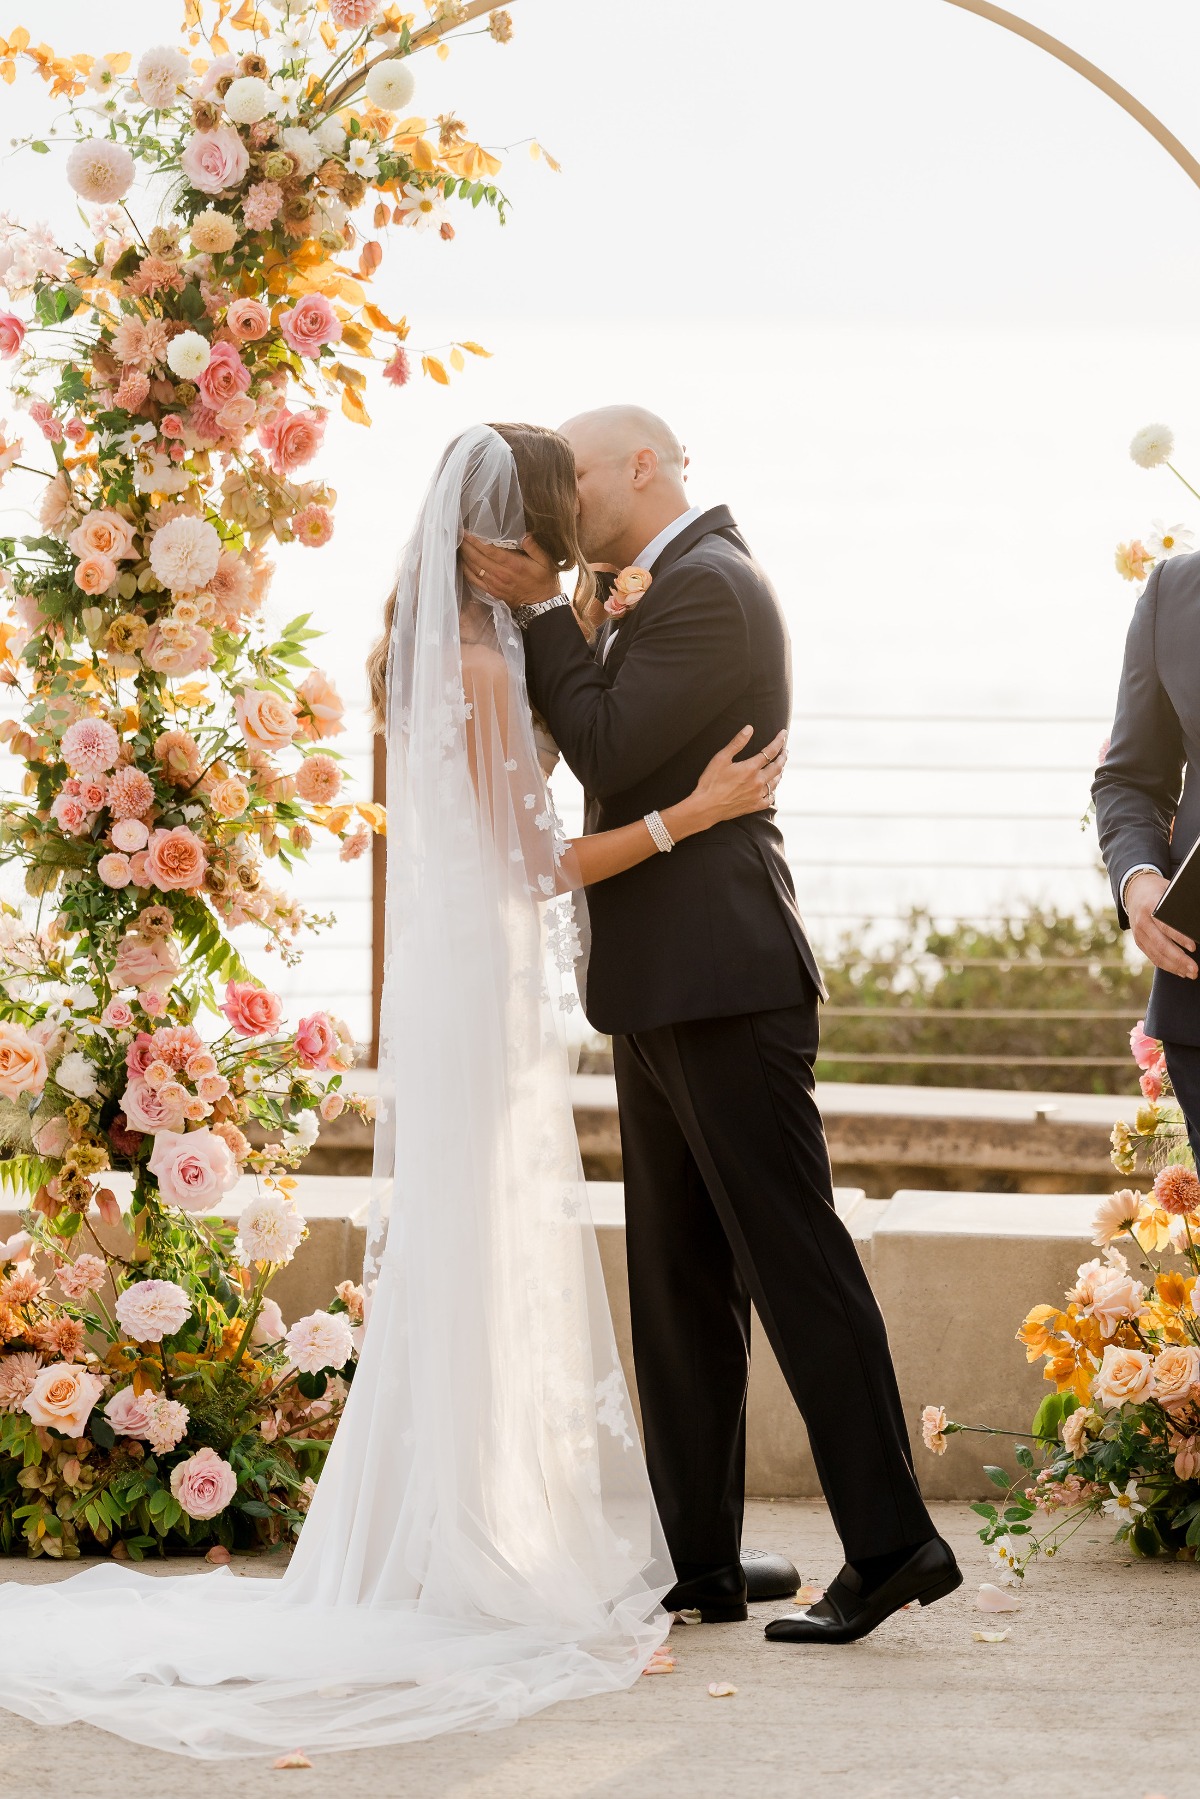 First kiss at California resort wedding